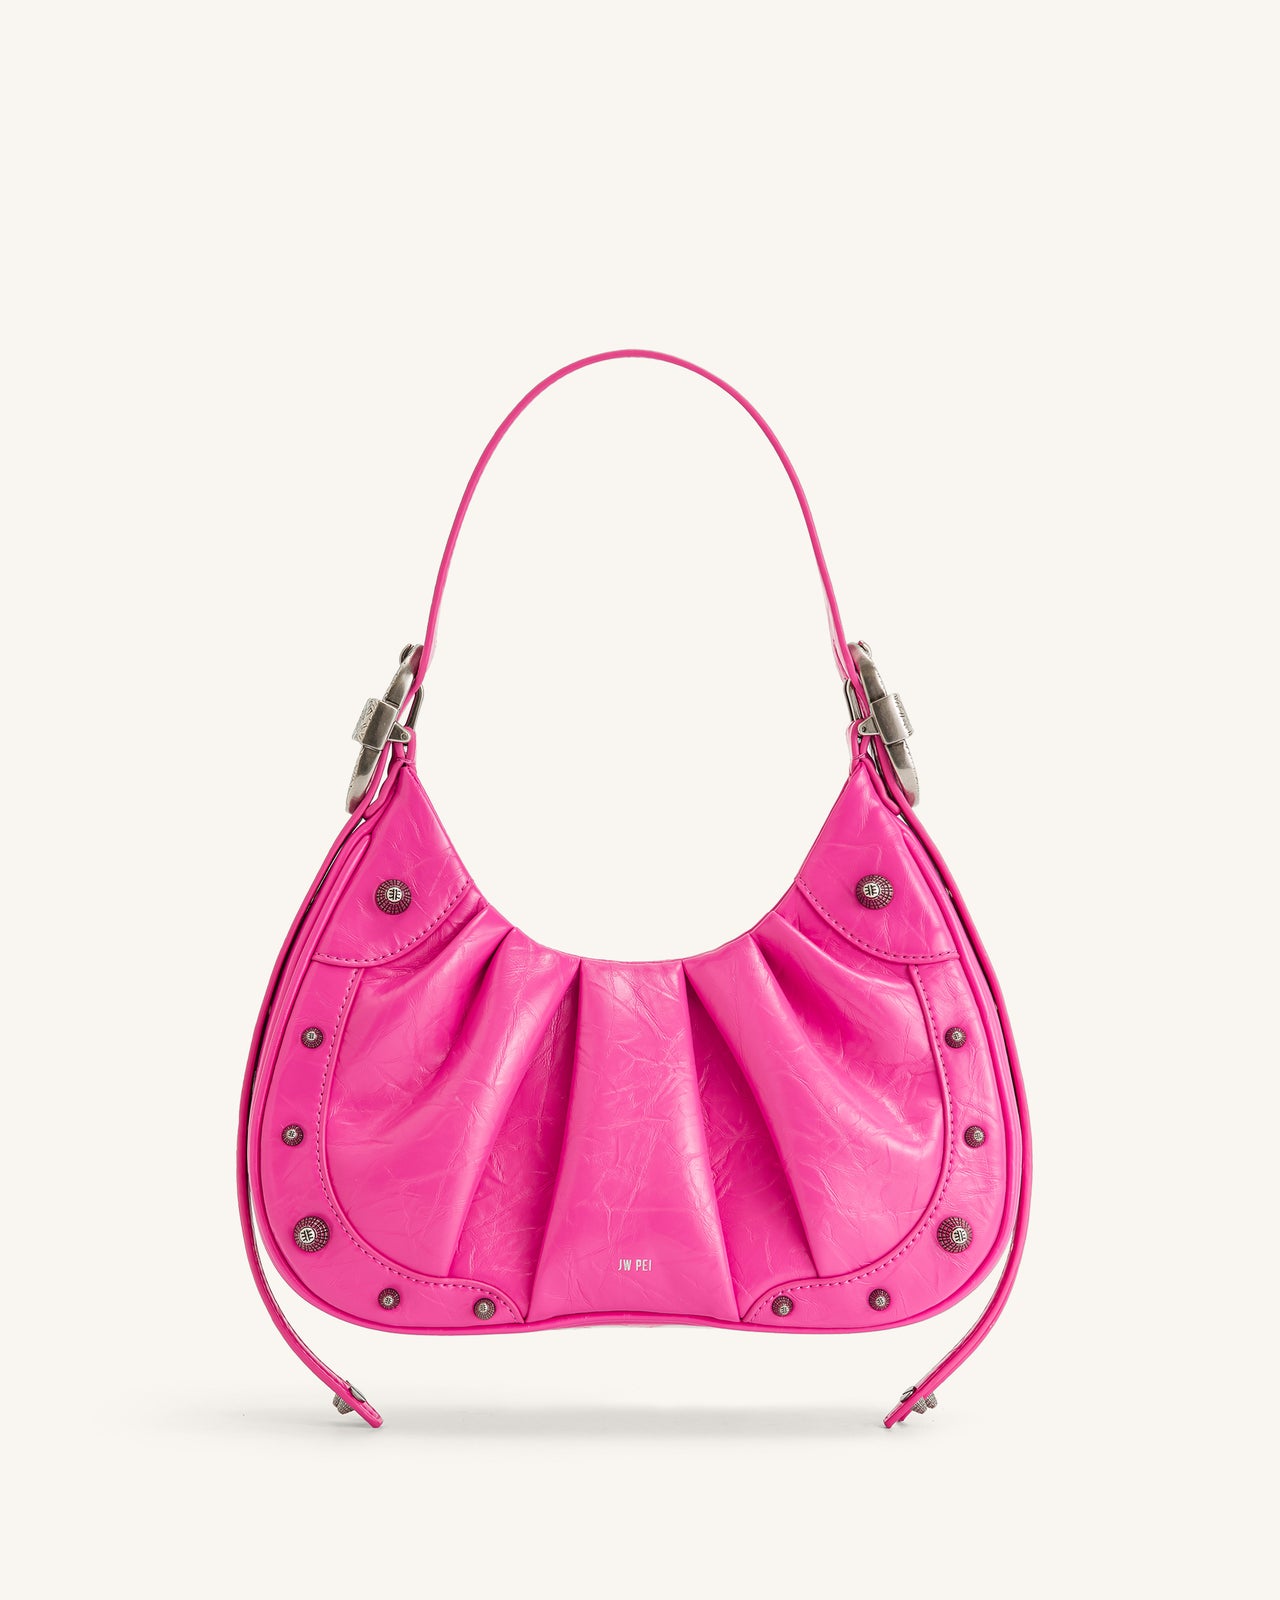 Gabbi Crushed Ruched Hobo Handbag - Bright Pink